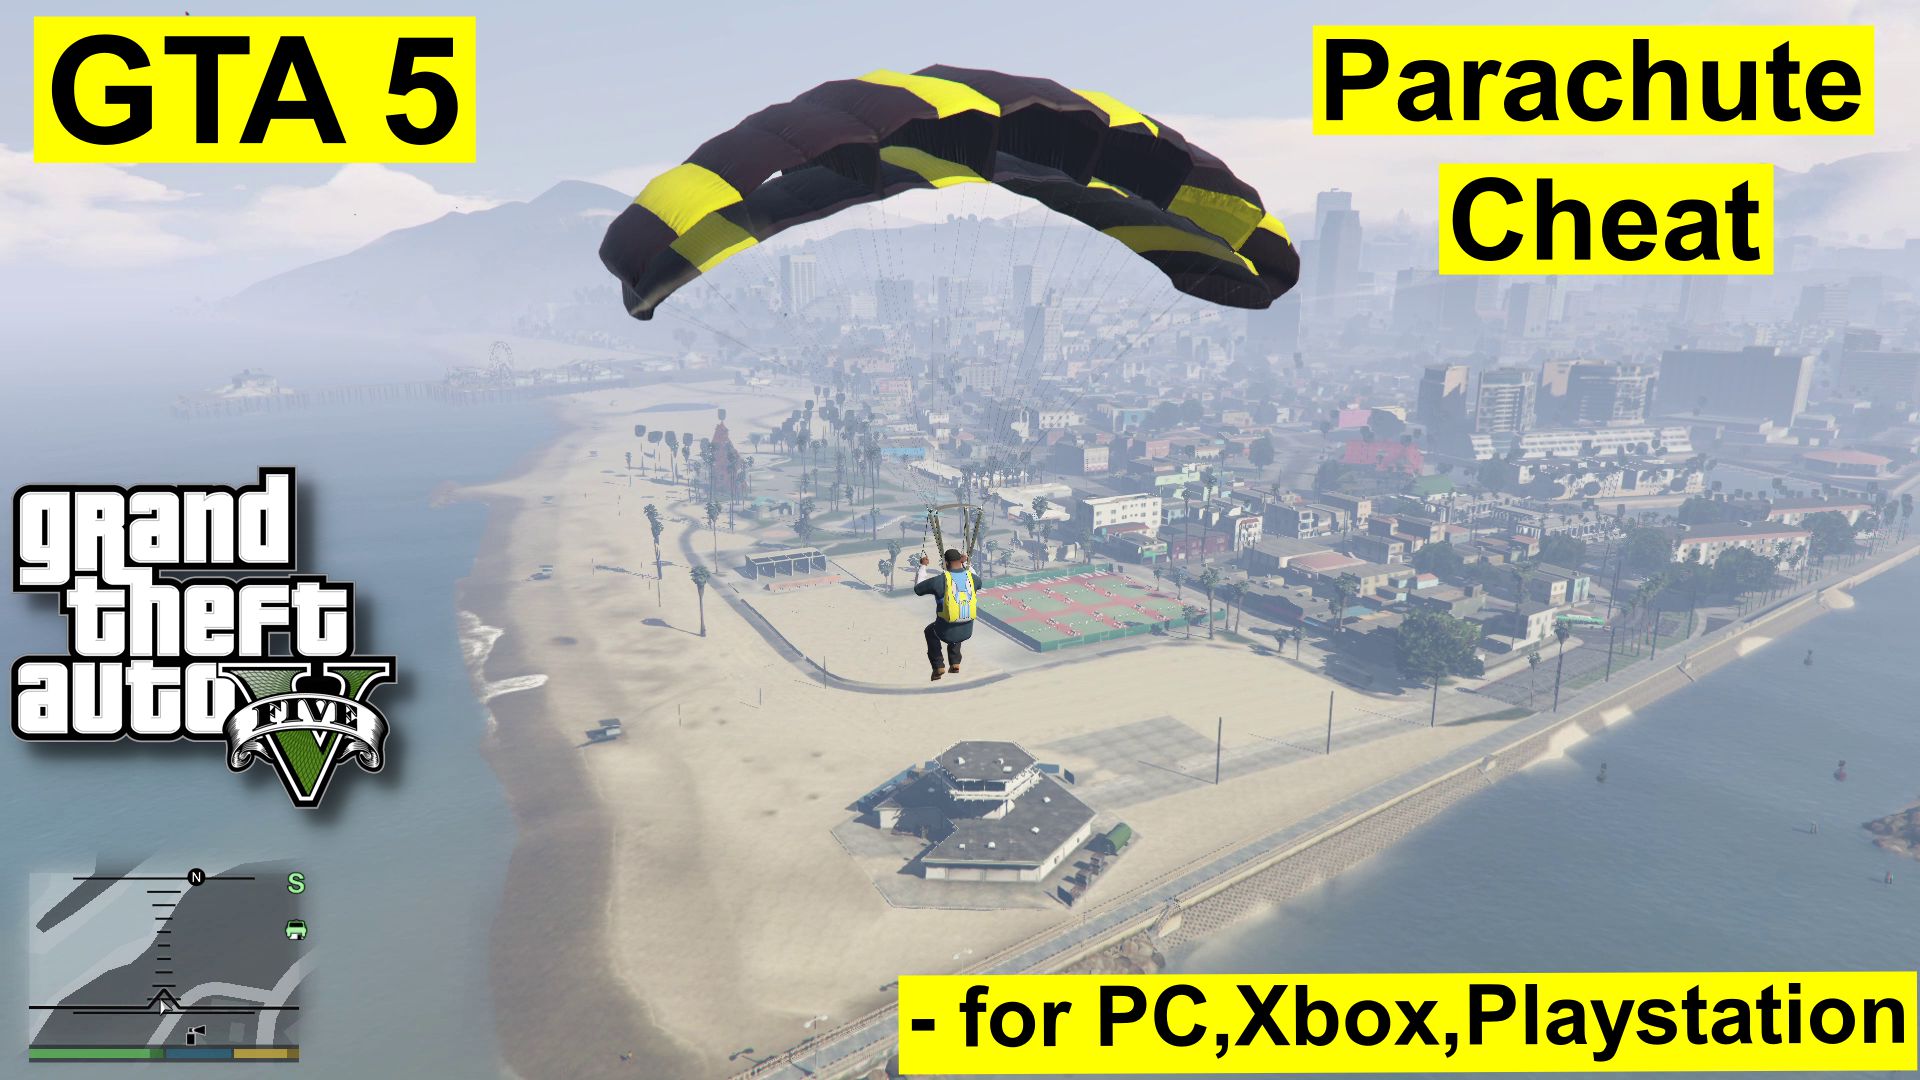 GTA 5 Parachute Cheat - for PC,Xbox,Playstation